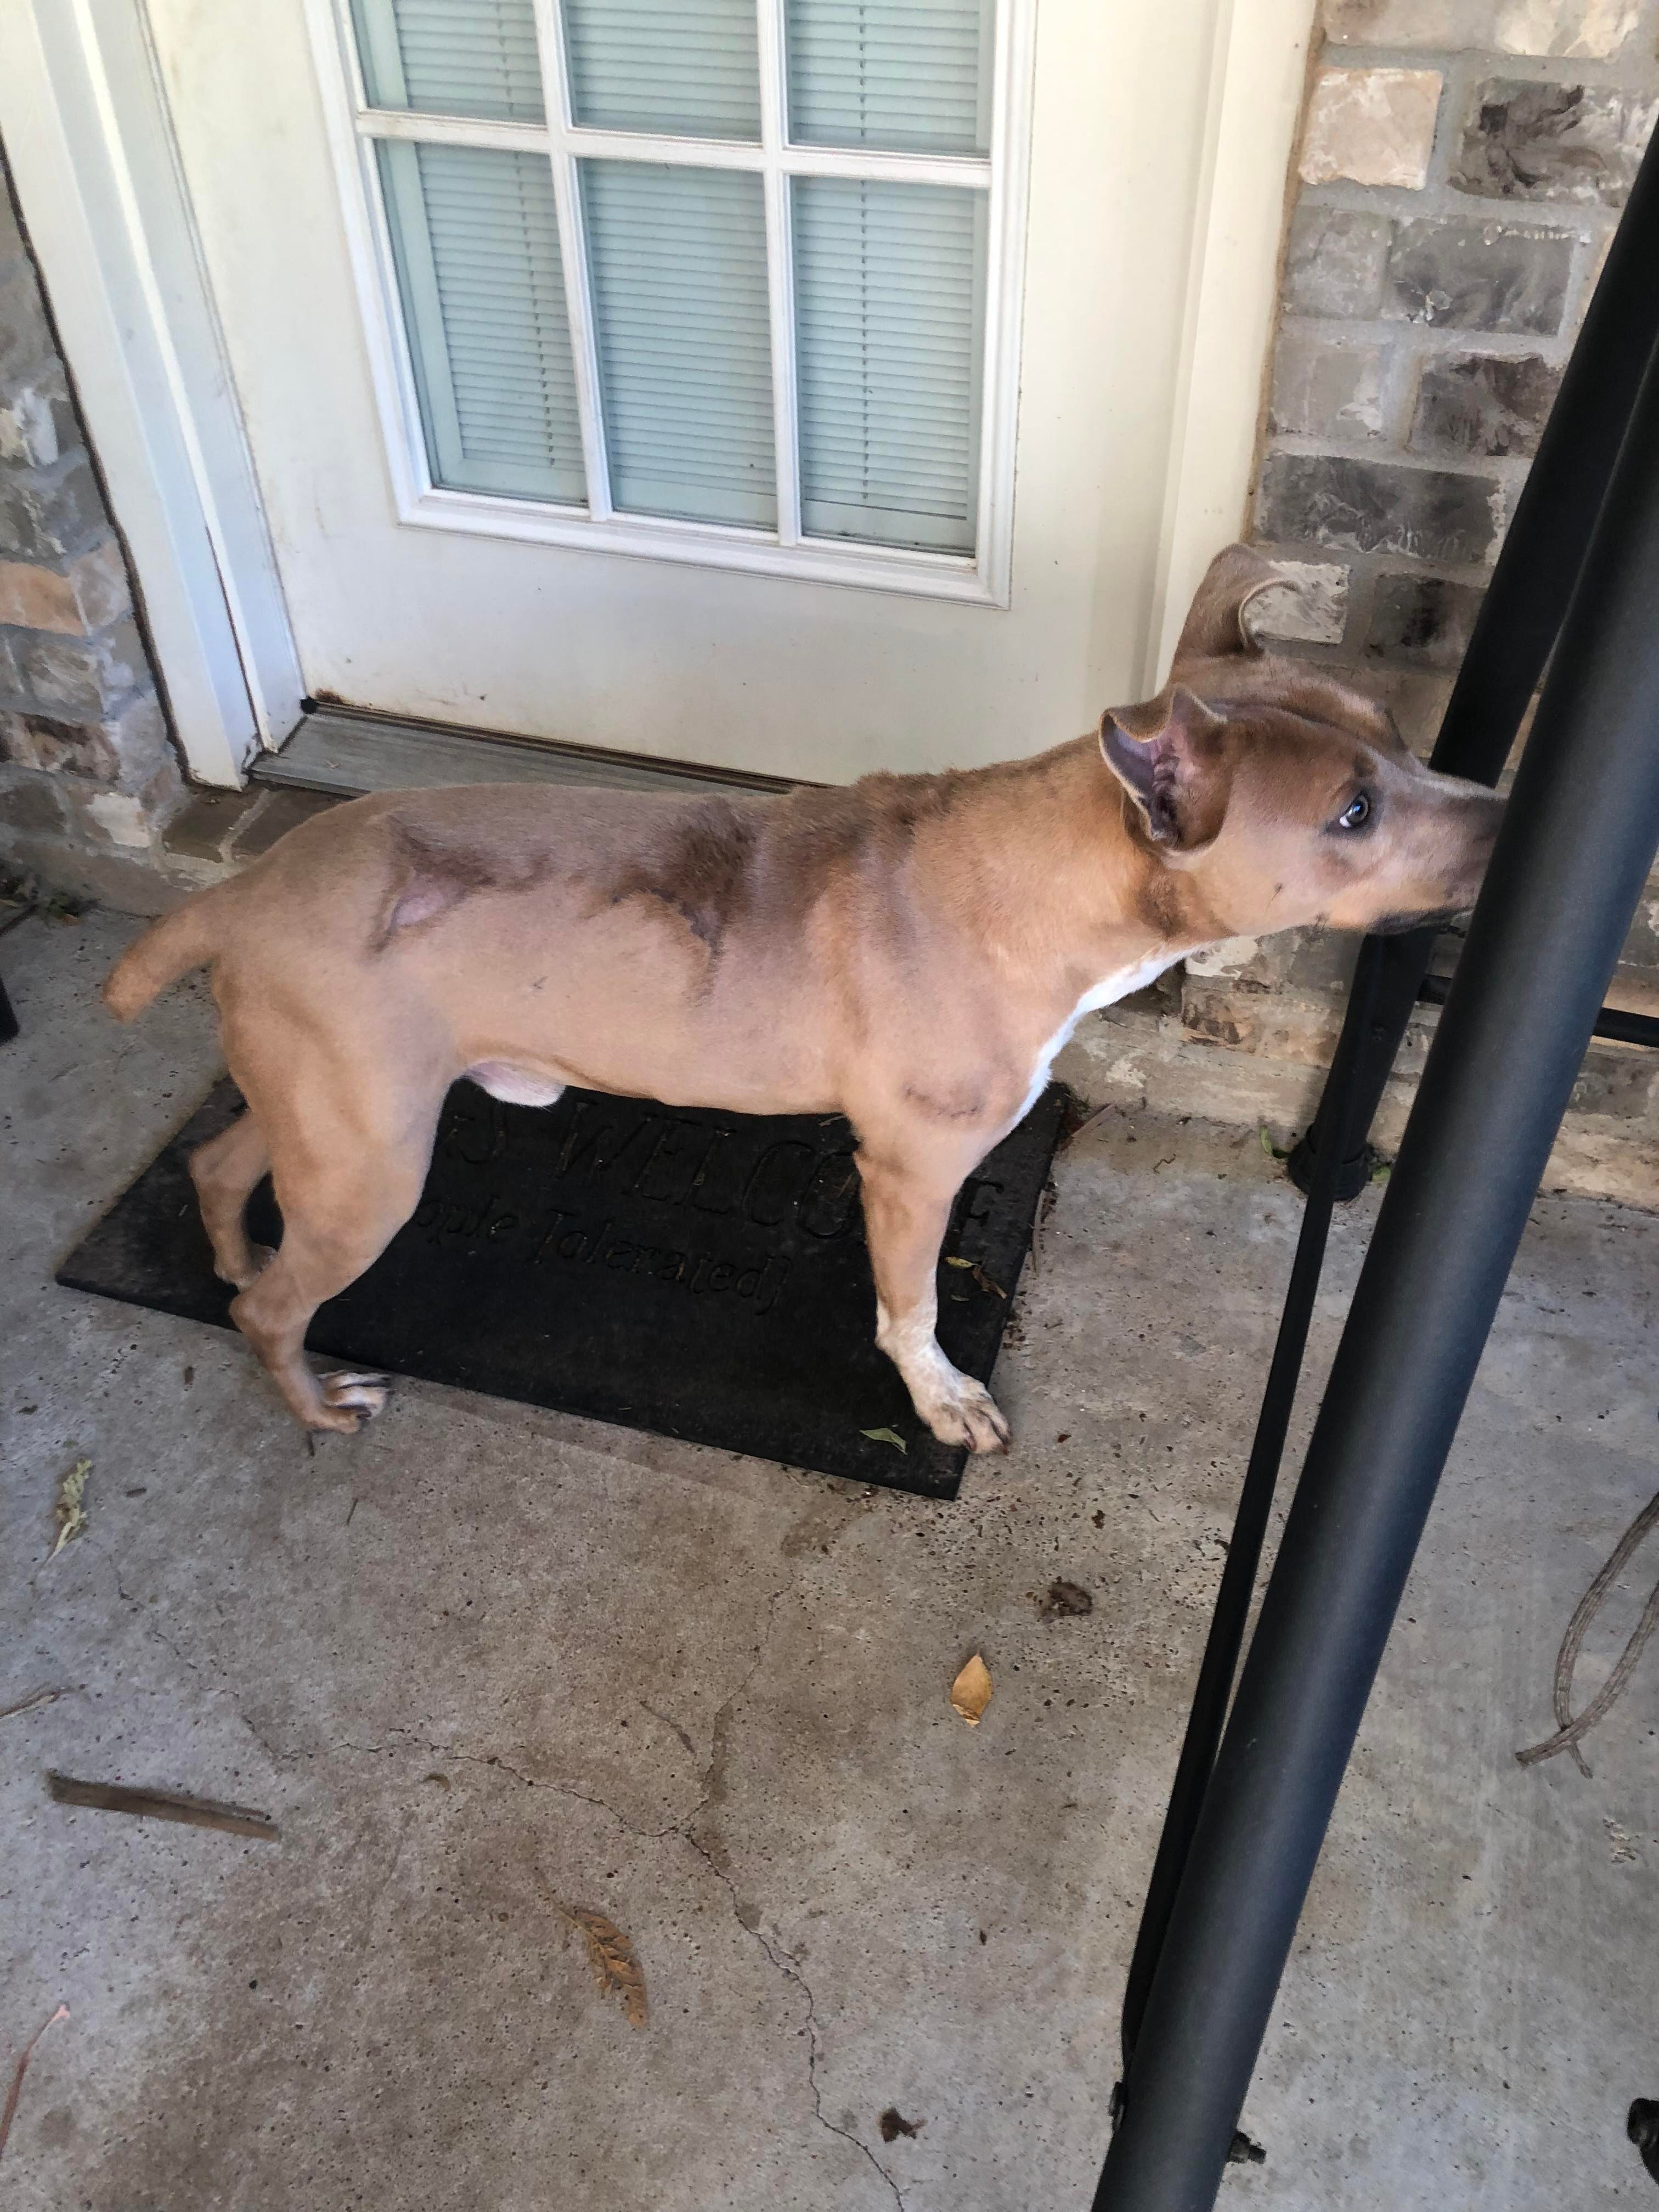 BRINKS, an adoptable Pit Bull Terrier in Orange, TX, 77632 | Photo Image 2